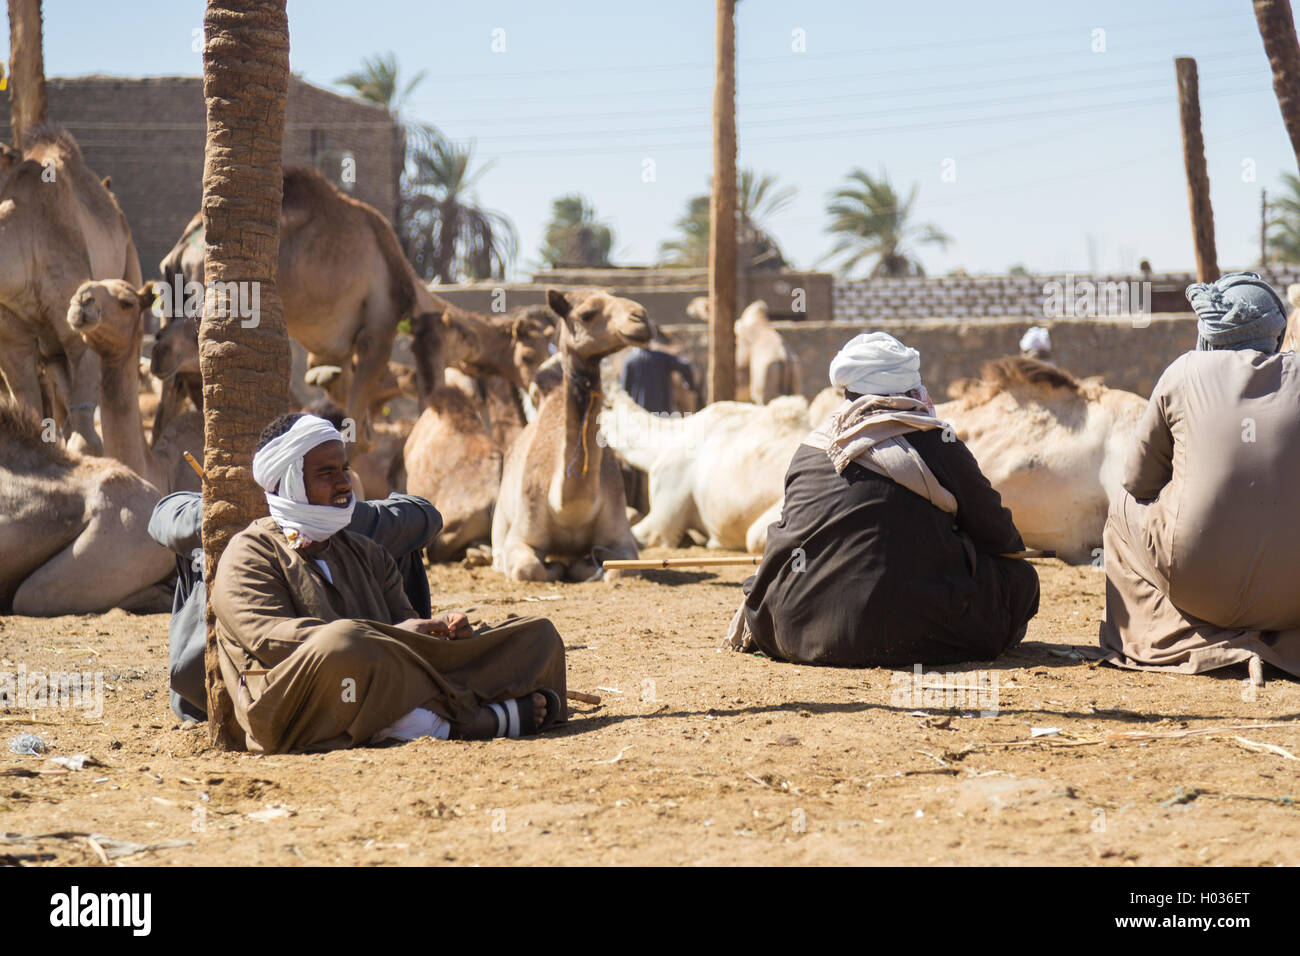 DARAW, EGYPT - FEBRUARY 6, 2016: Local camel salesmen on Camel market sitting on ground. Stock Photo